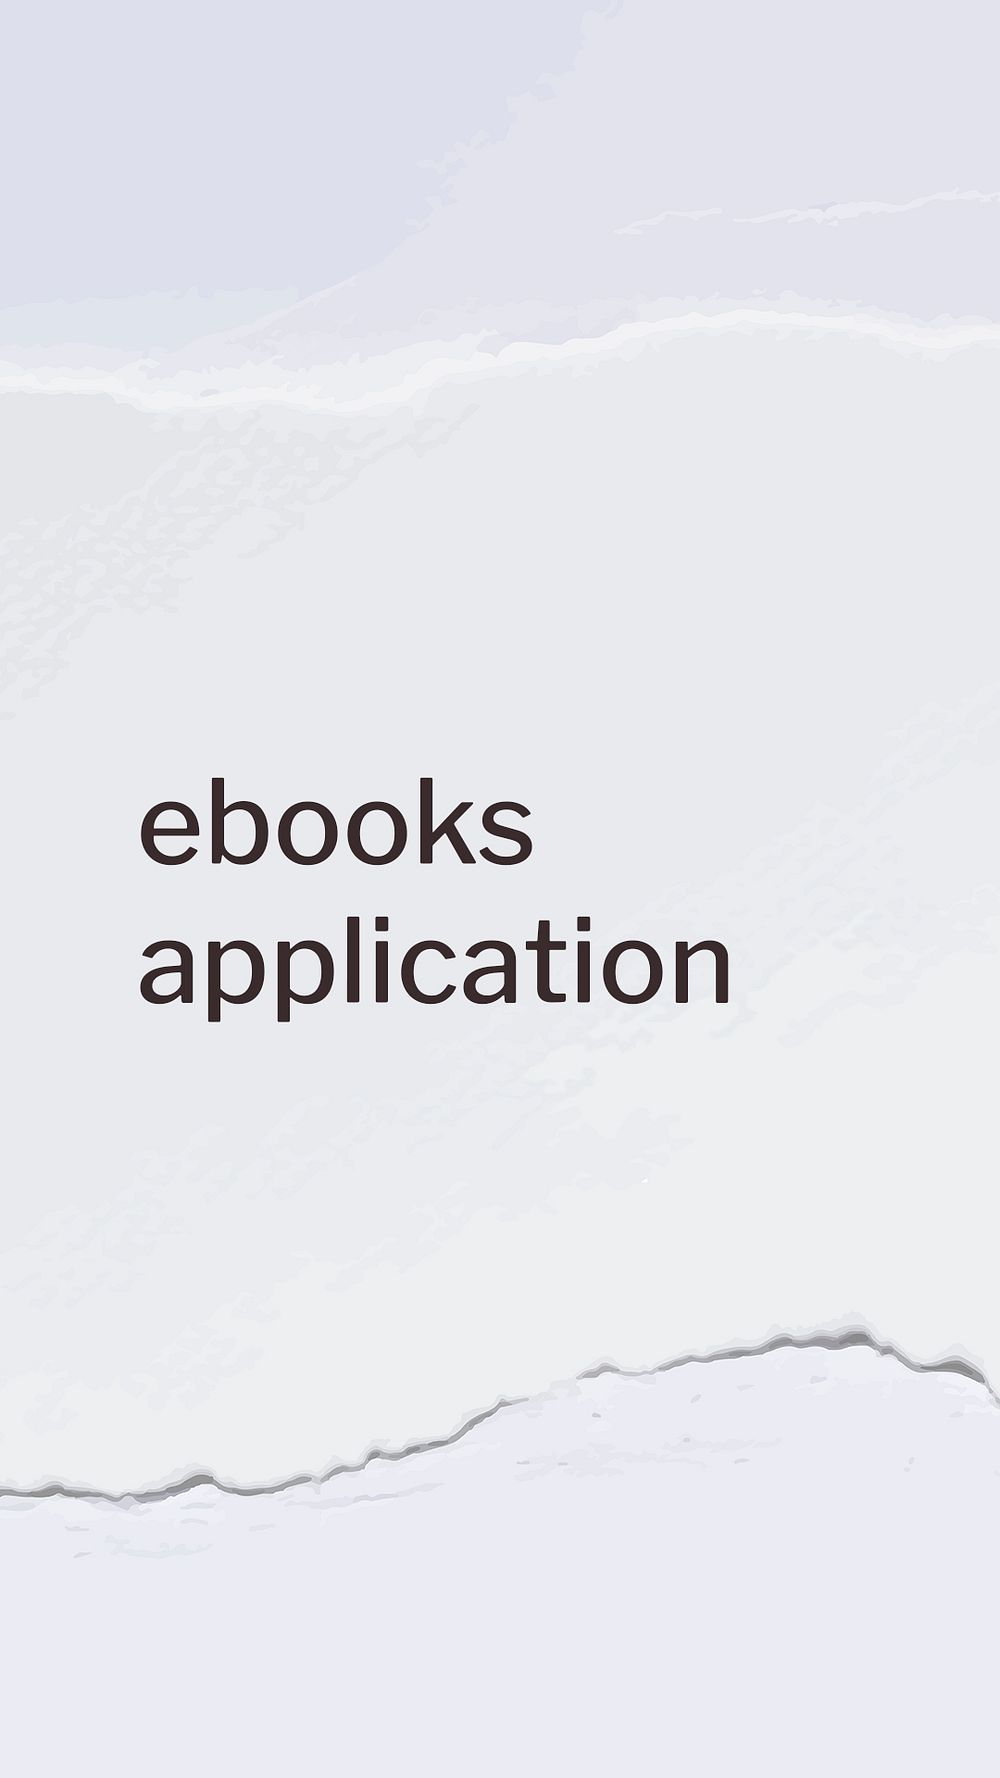 minimal-ebooks-application-template-psd-free-psd-template-rawpixel